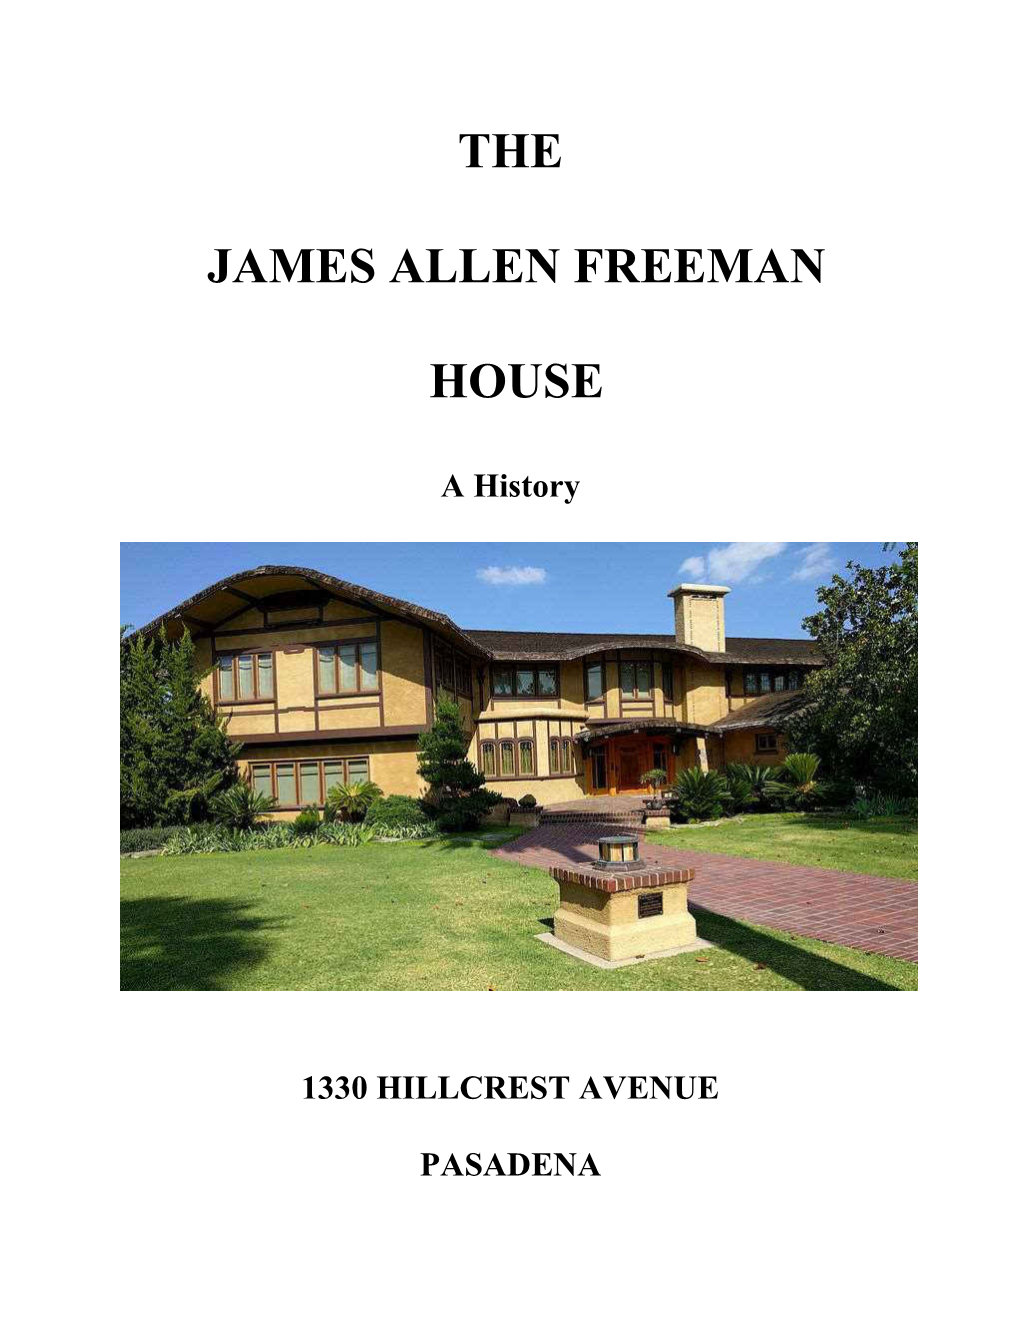 The James Allen Freeman House